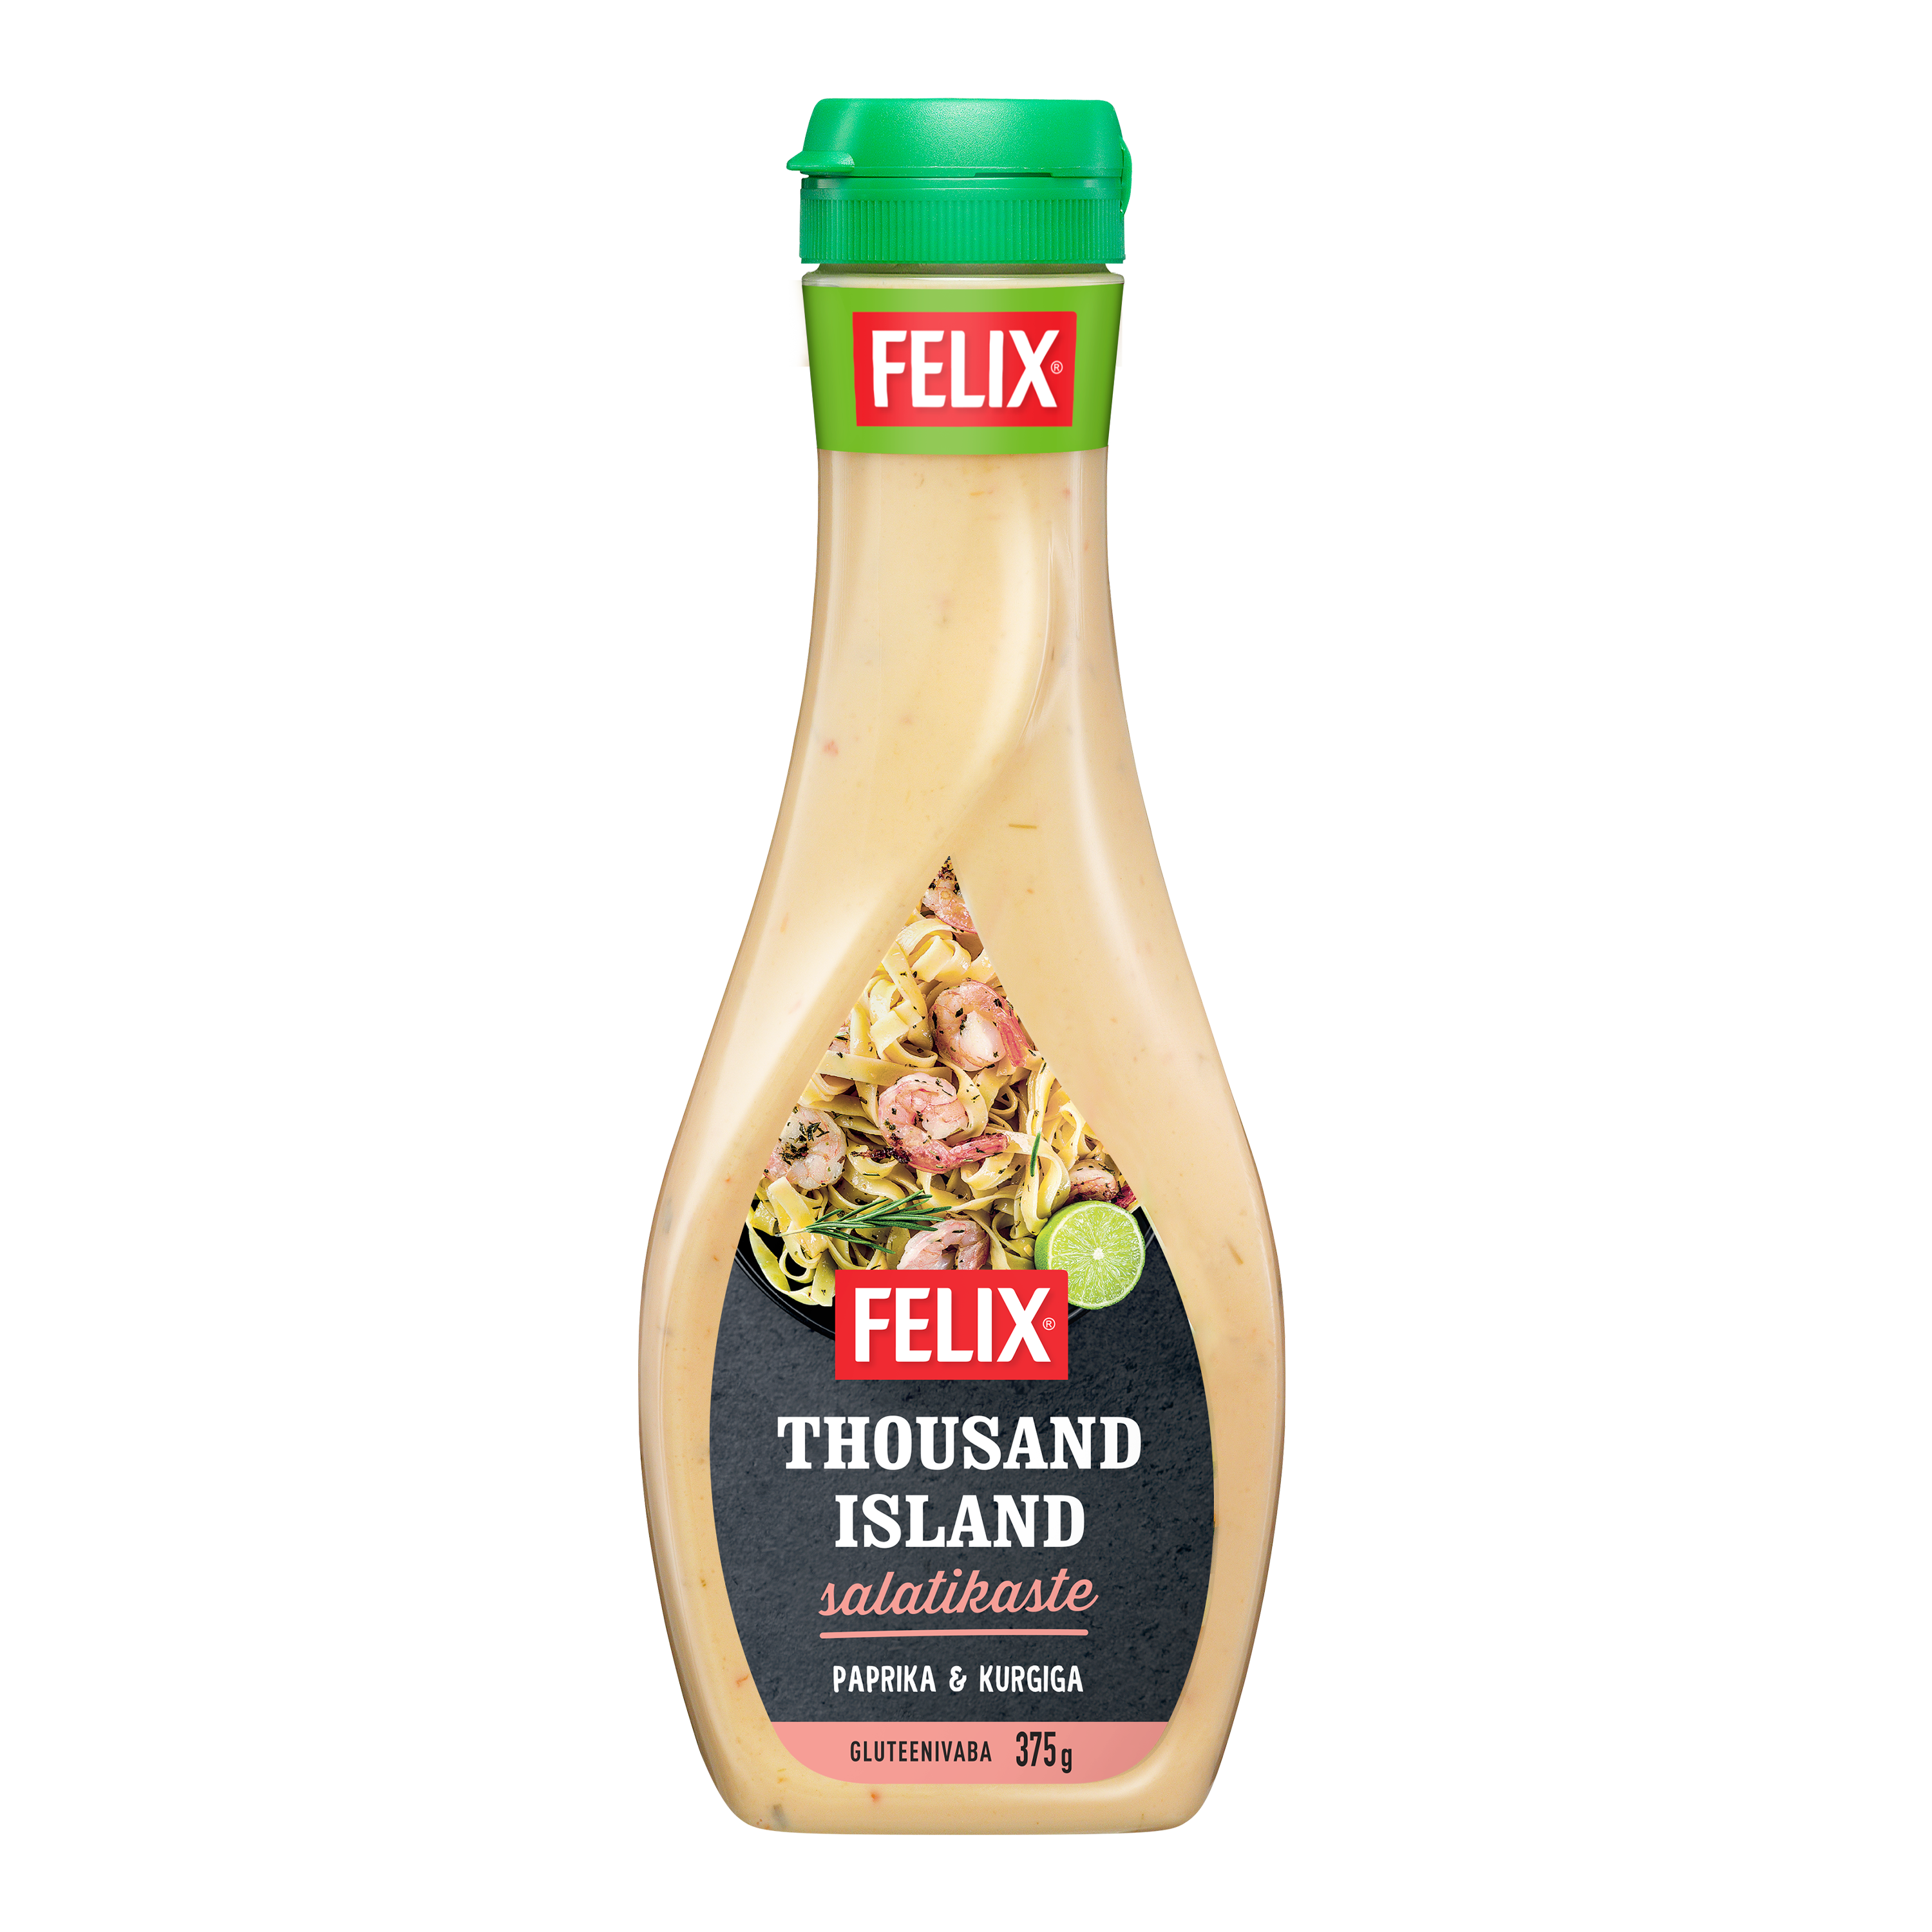 Felix Thousand Island salatikaste 375g